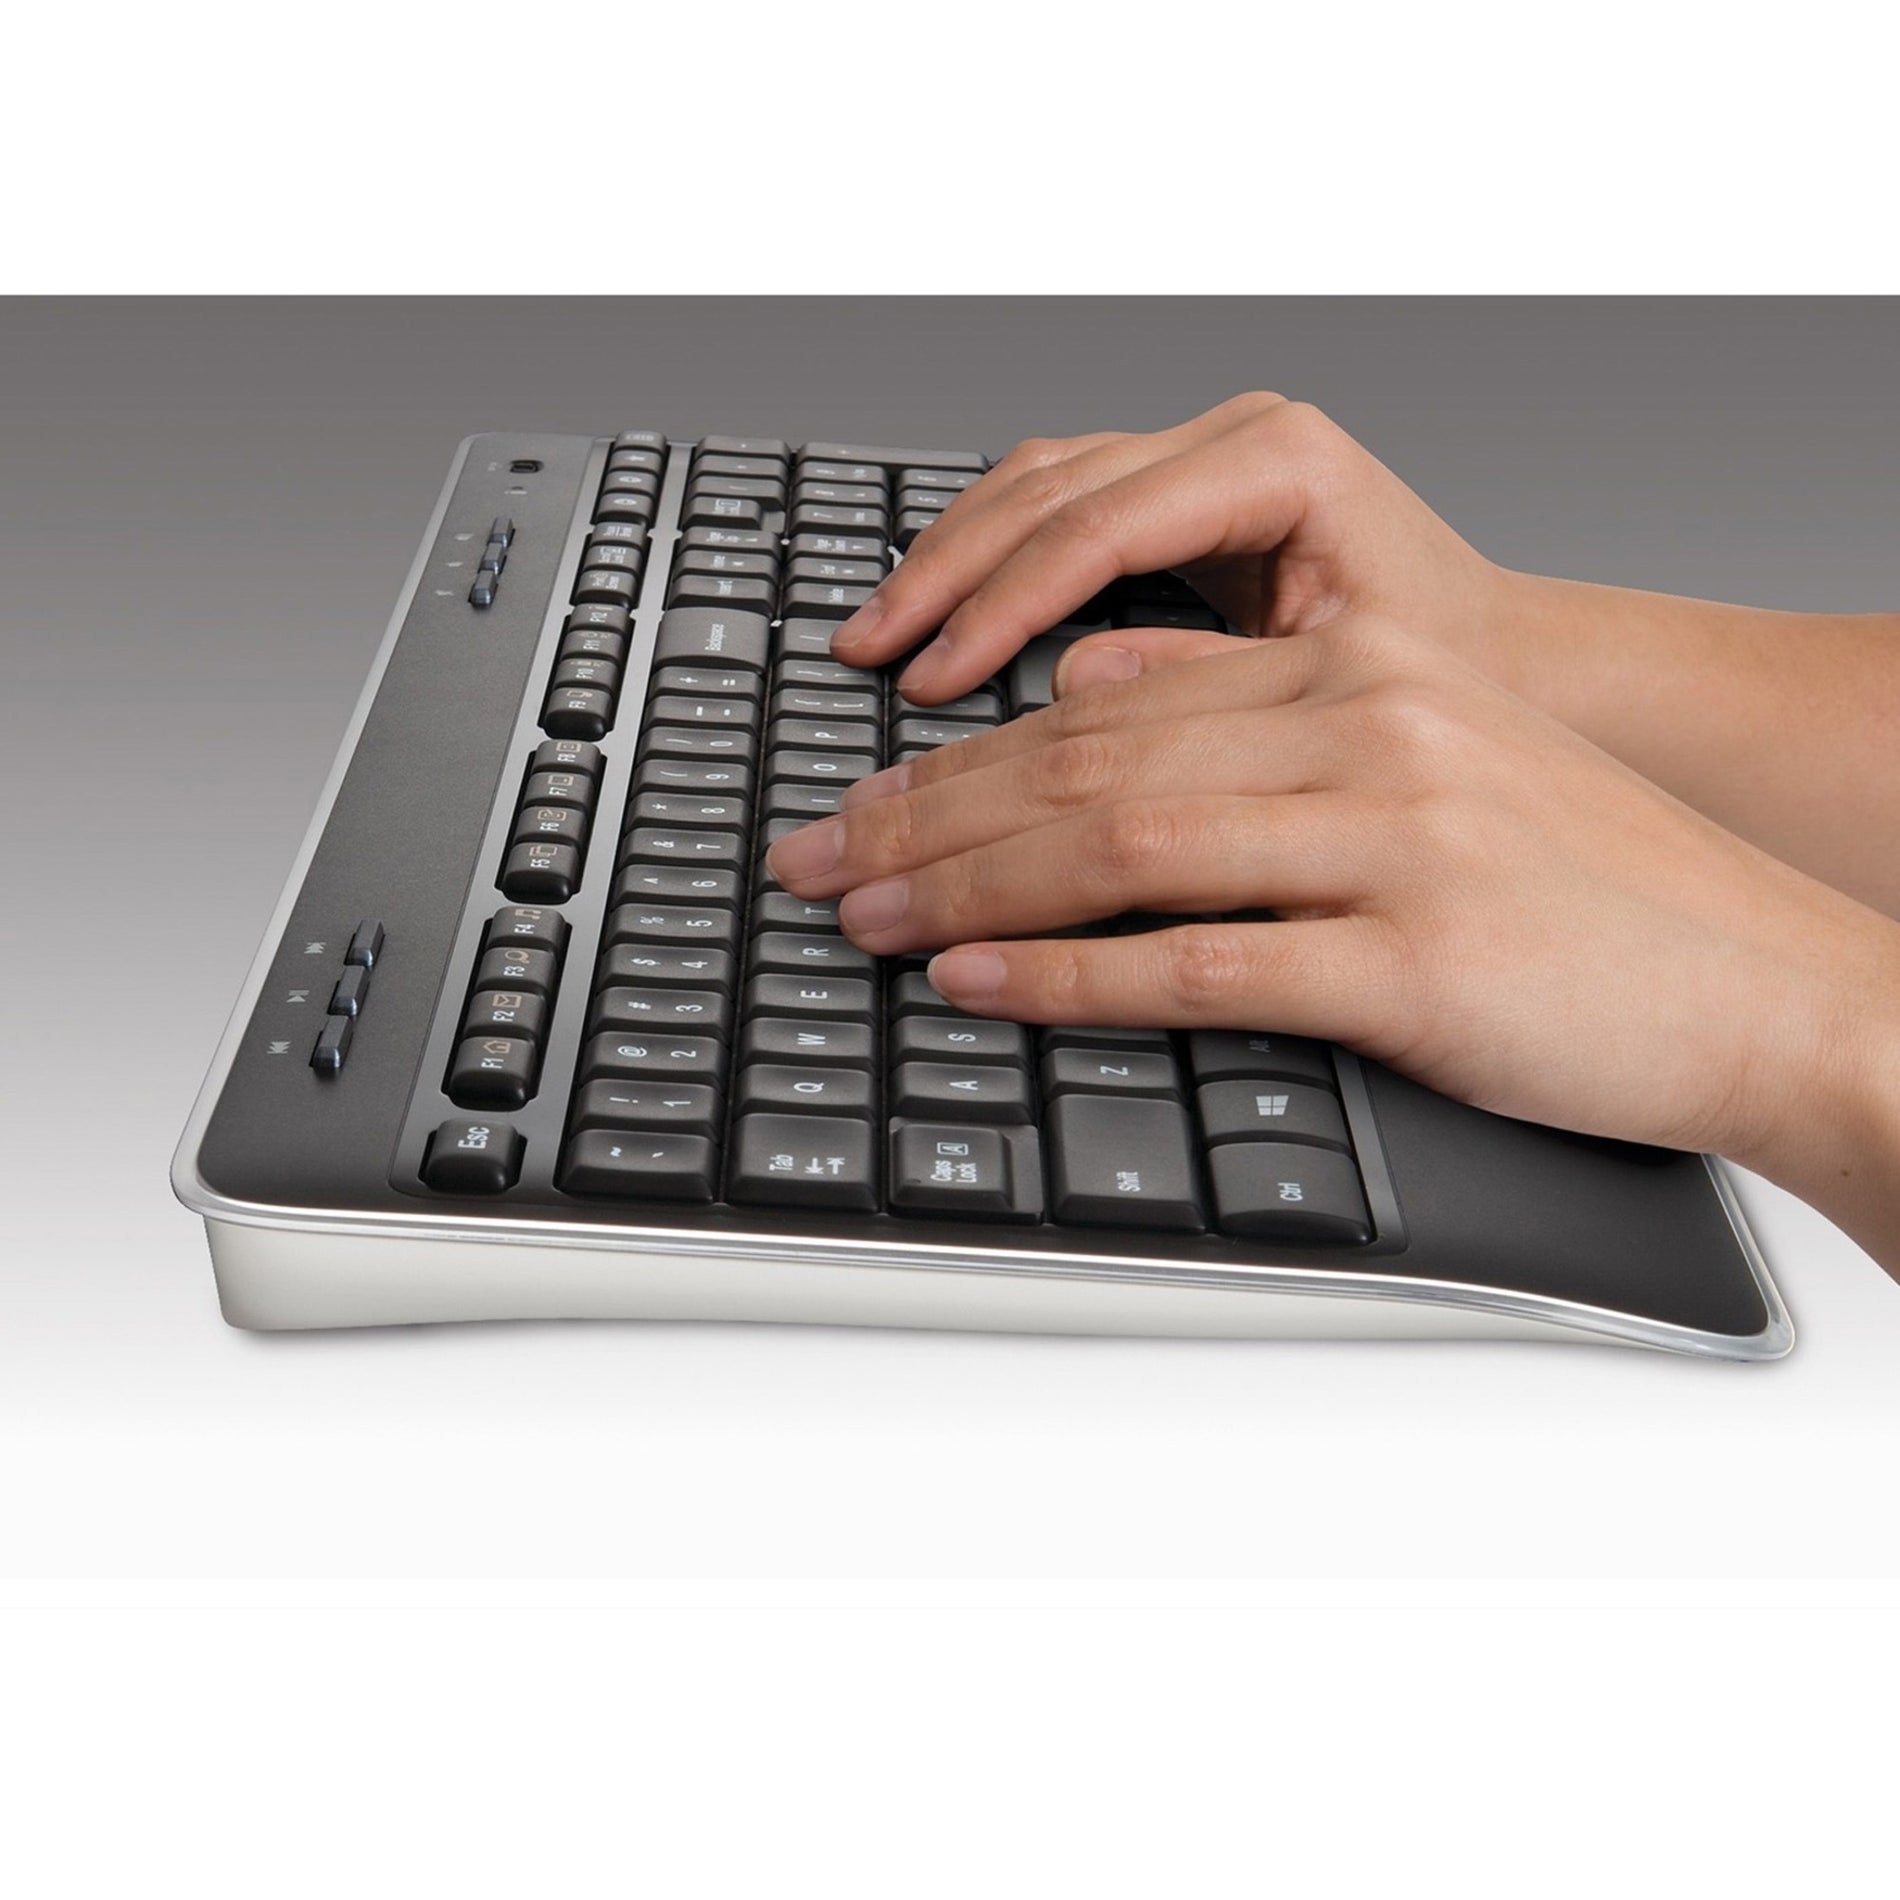 Logitech 920-002553 MK520 Full Keyboard/Laser Mouse Combo, Spill Resistant, Slim, Soft-touch Keys, Palm Rest, Ergonomic, RF Wireless, 32.81 ft Operating Distance